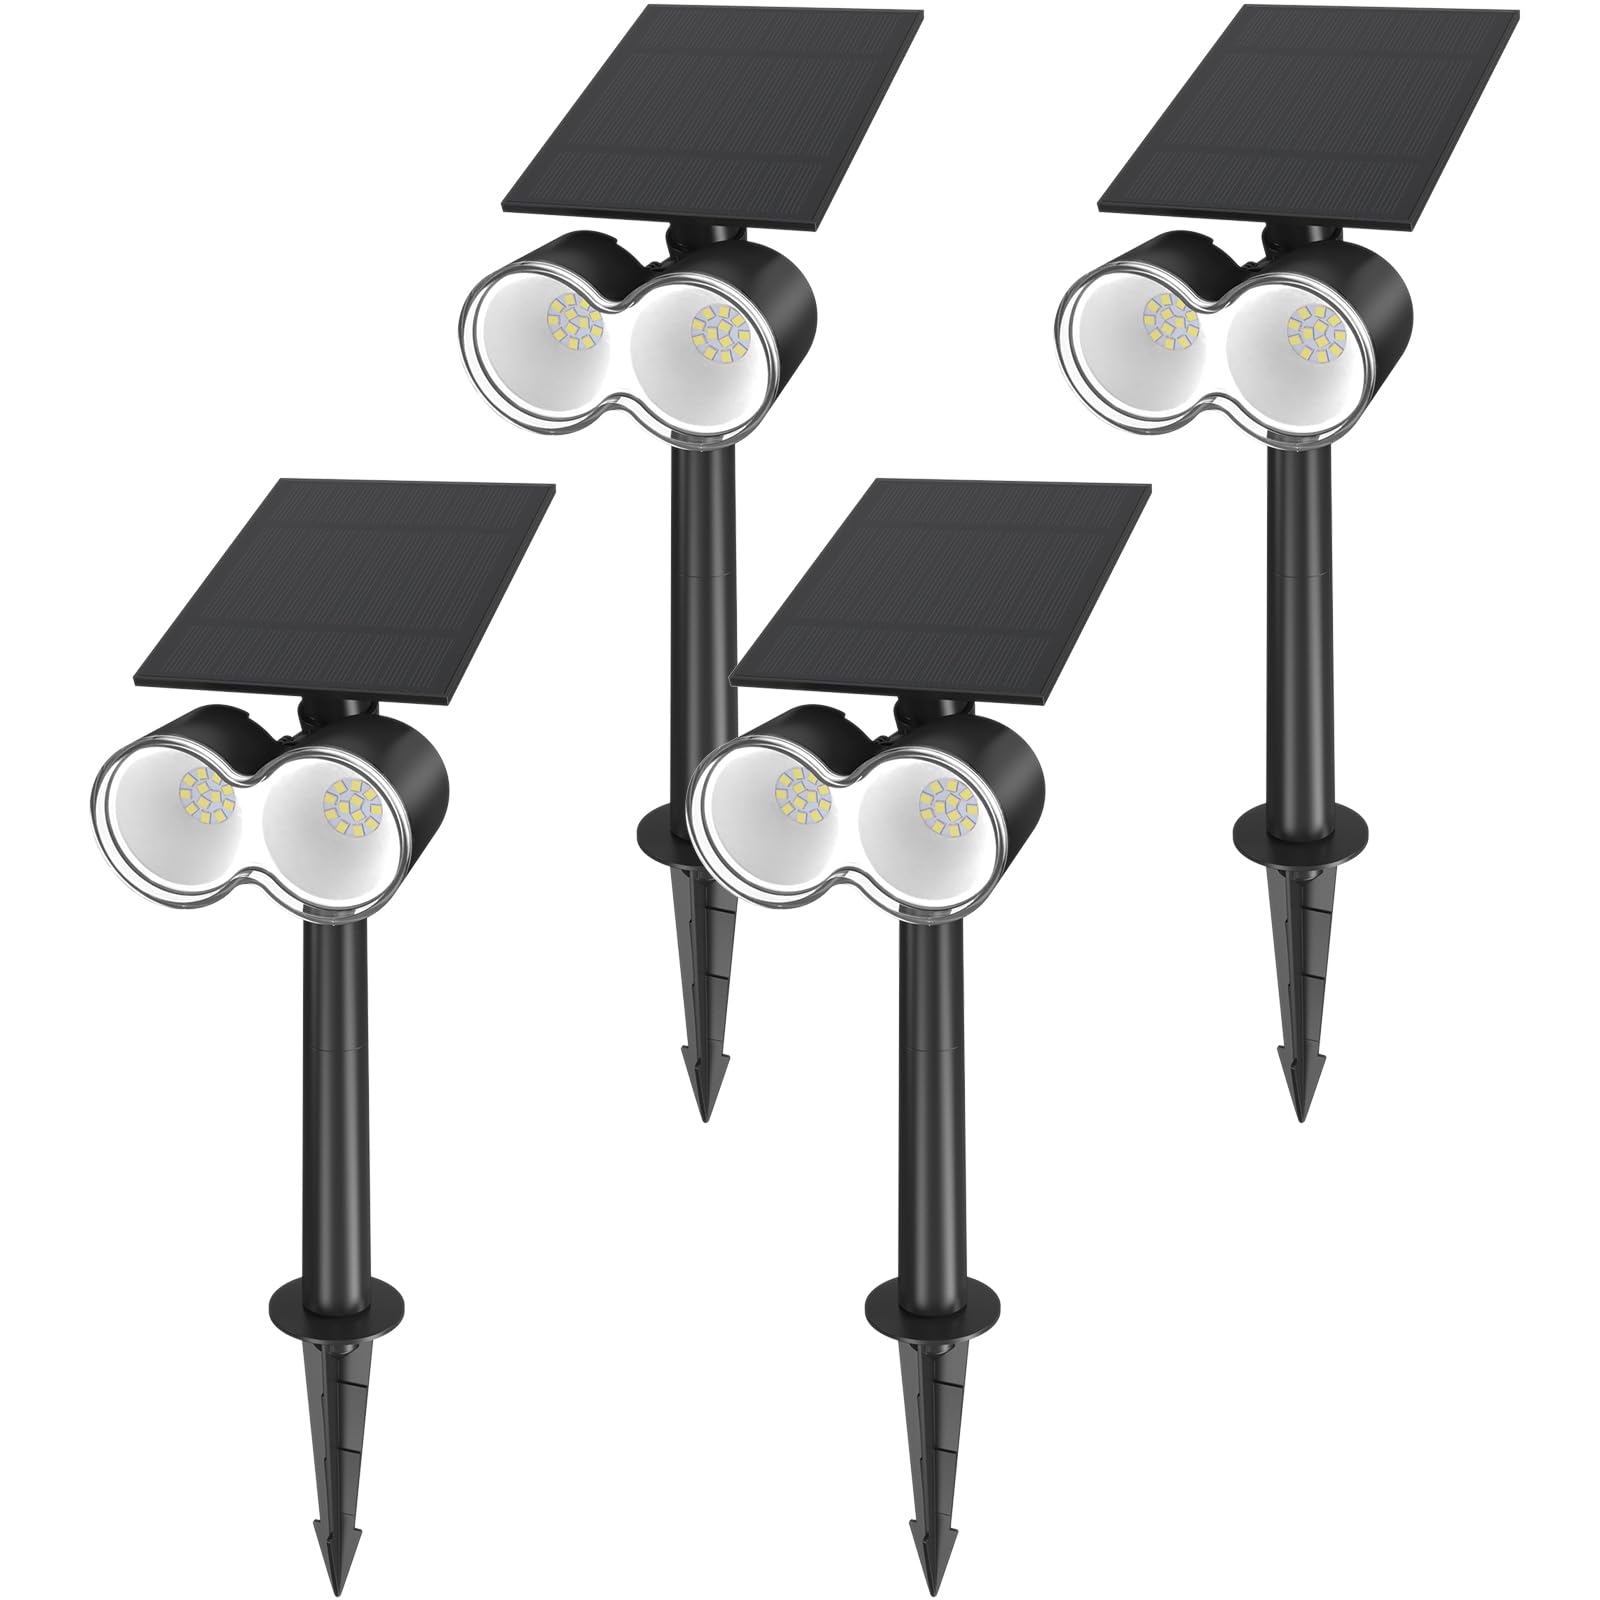 Solar Spot Lights,6500K,360°Horizontal Adjustable,3 Modes,Auto ON/OFF,4 Packs,WX 6500K 4